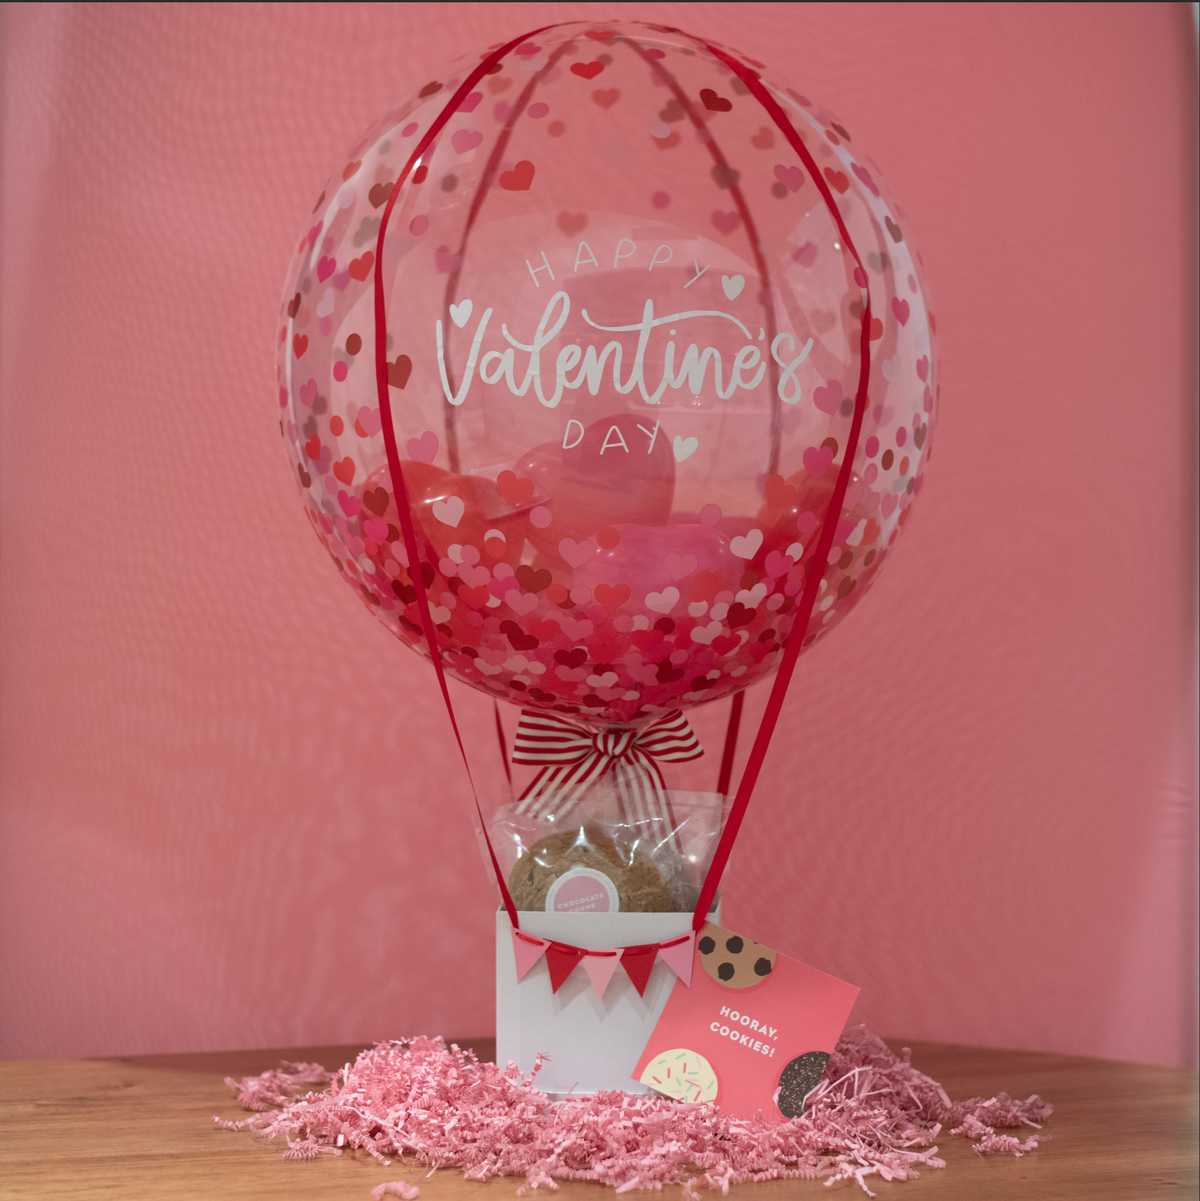 Jubilee + Dolce Valentine Cookie Balloon